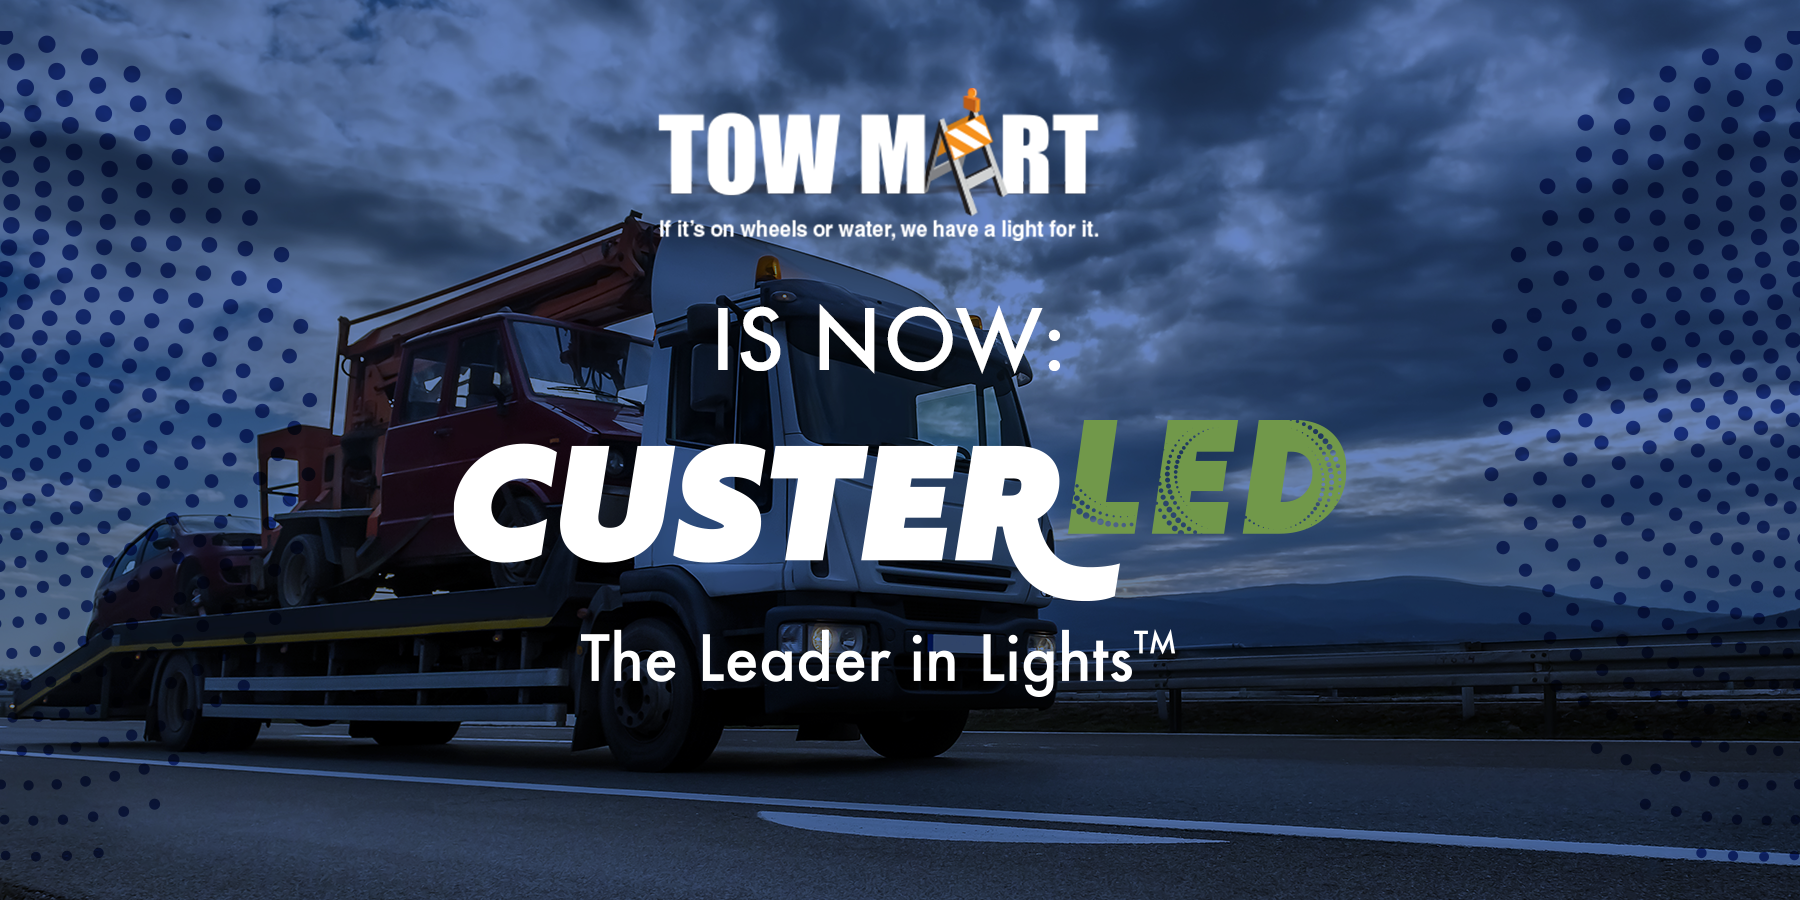 Tow Mart & Custer Logos Announcement